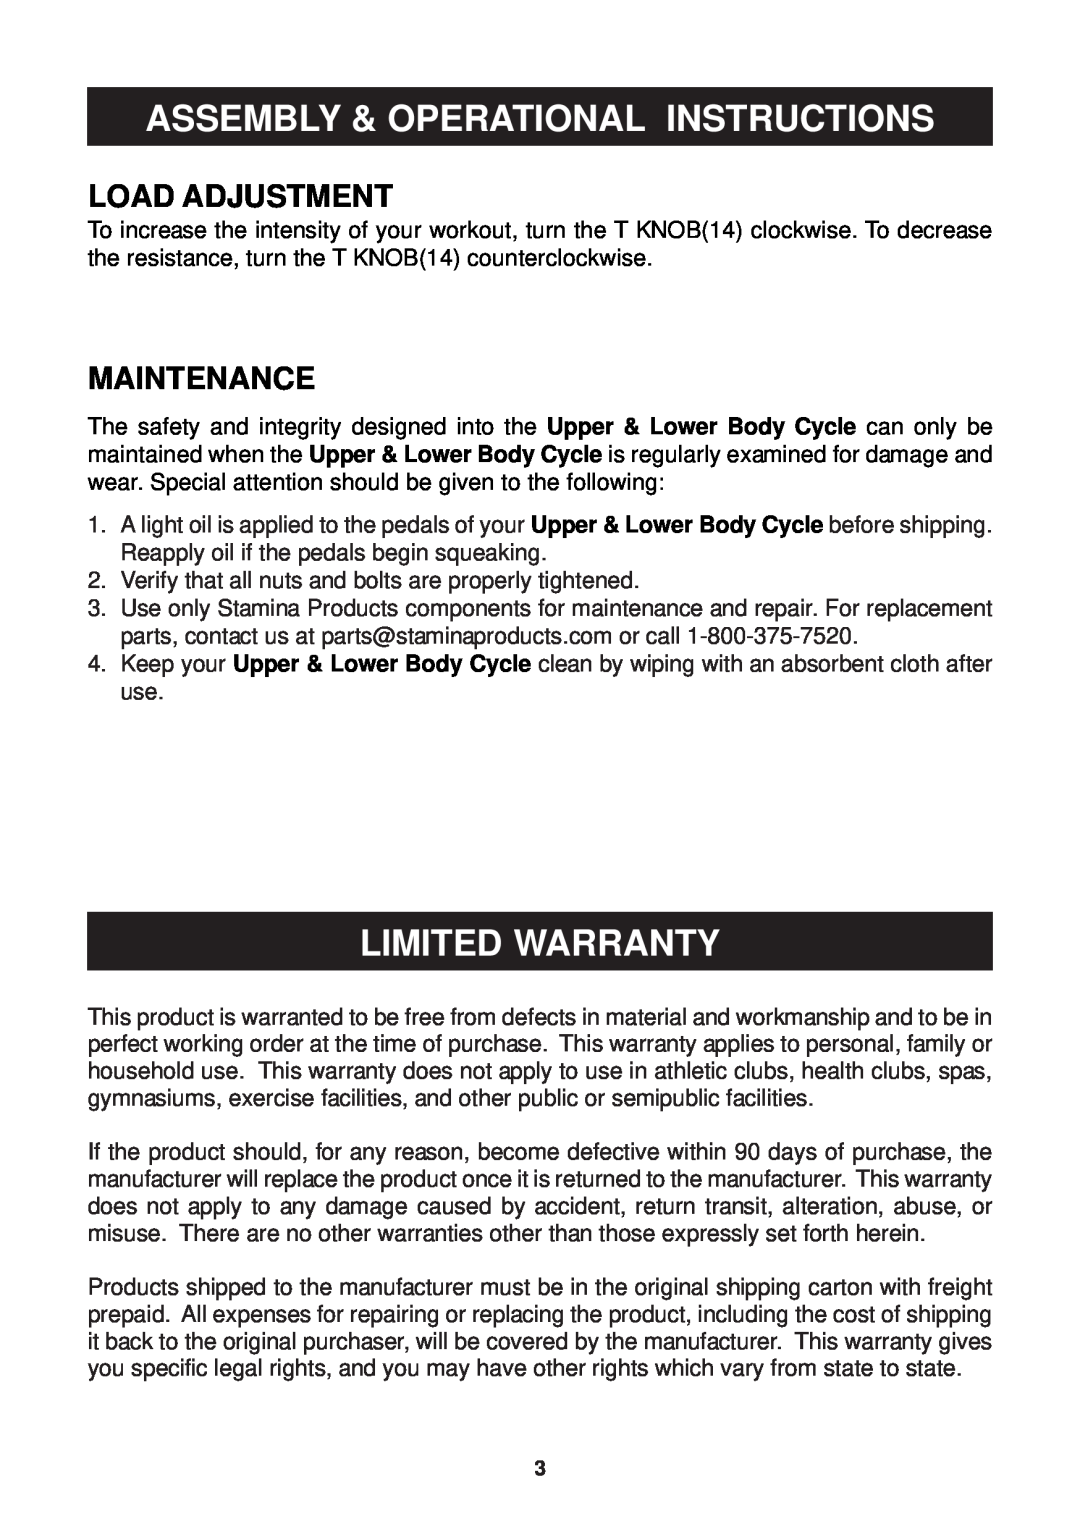 Stamina Products 15 - 0110BW warranty Limited Warranty, Assembly & Operational Instructions, Load Adjustment, Maintenance 